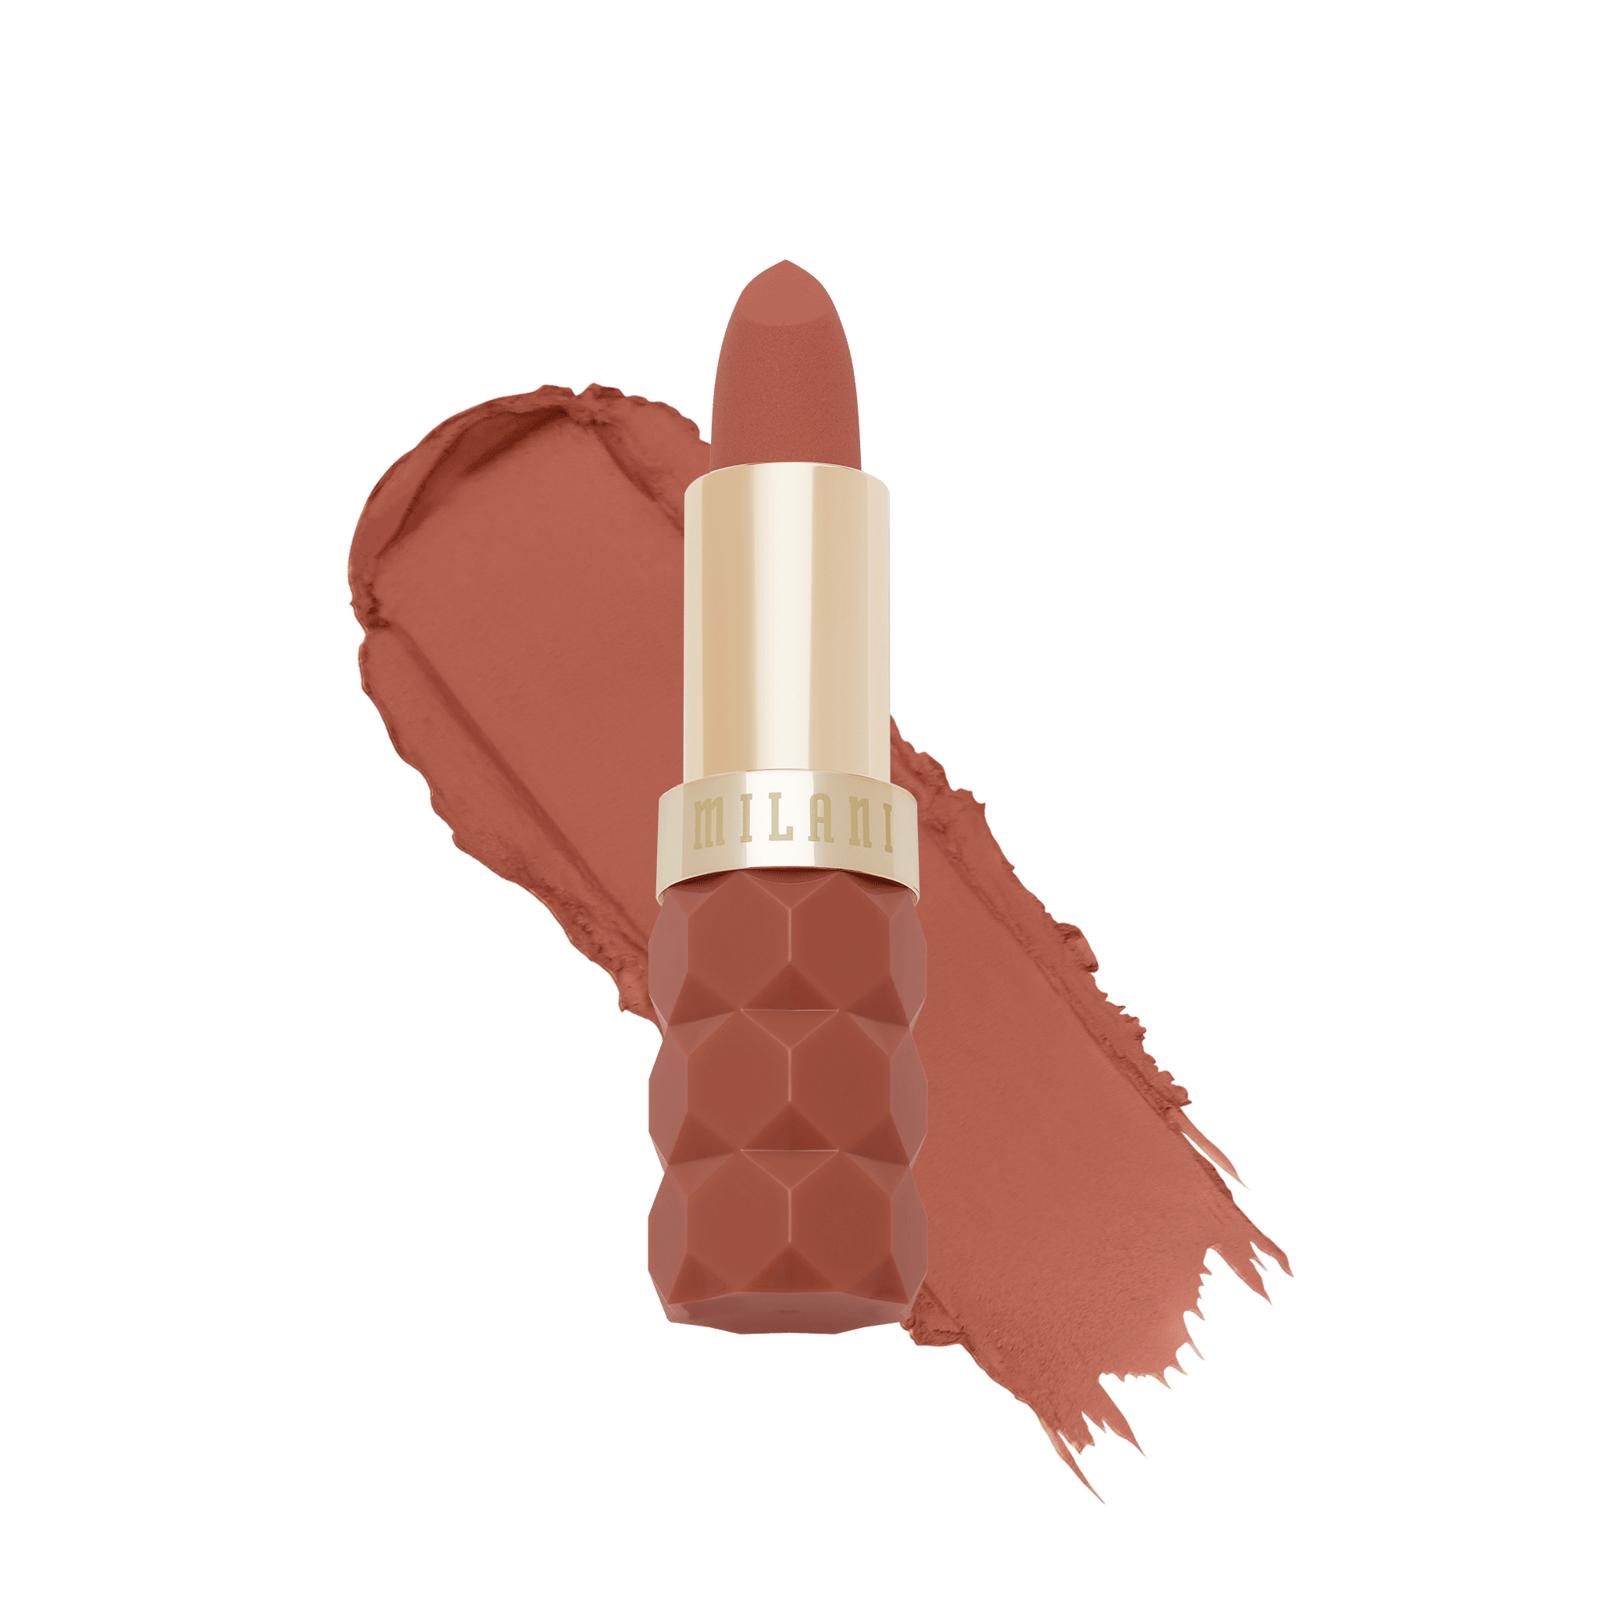 Milani Color Fetish Matte Lipstick Tease 4g